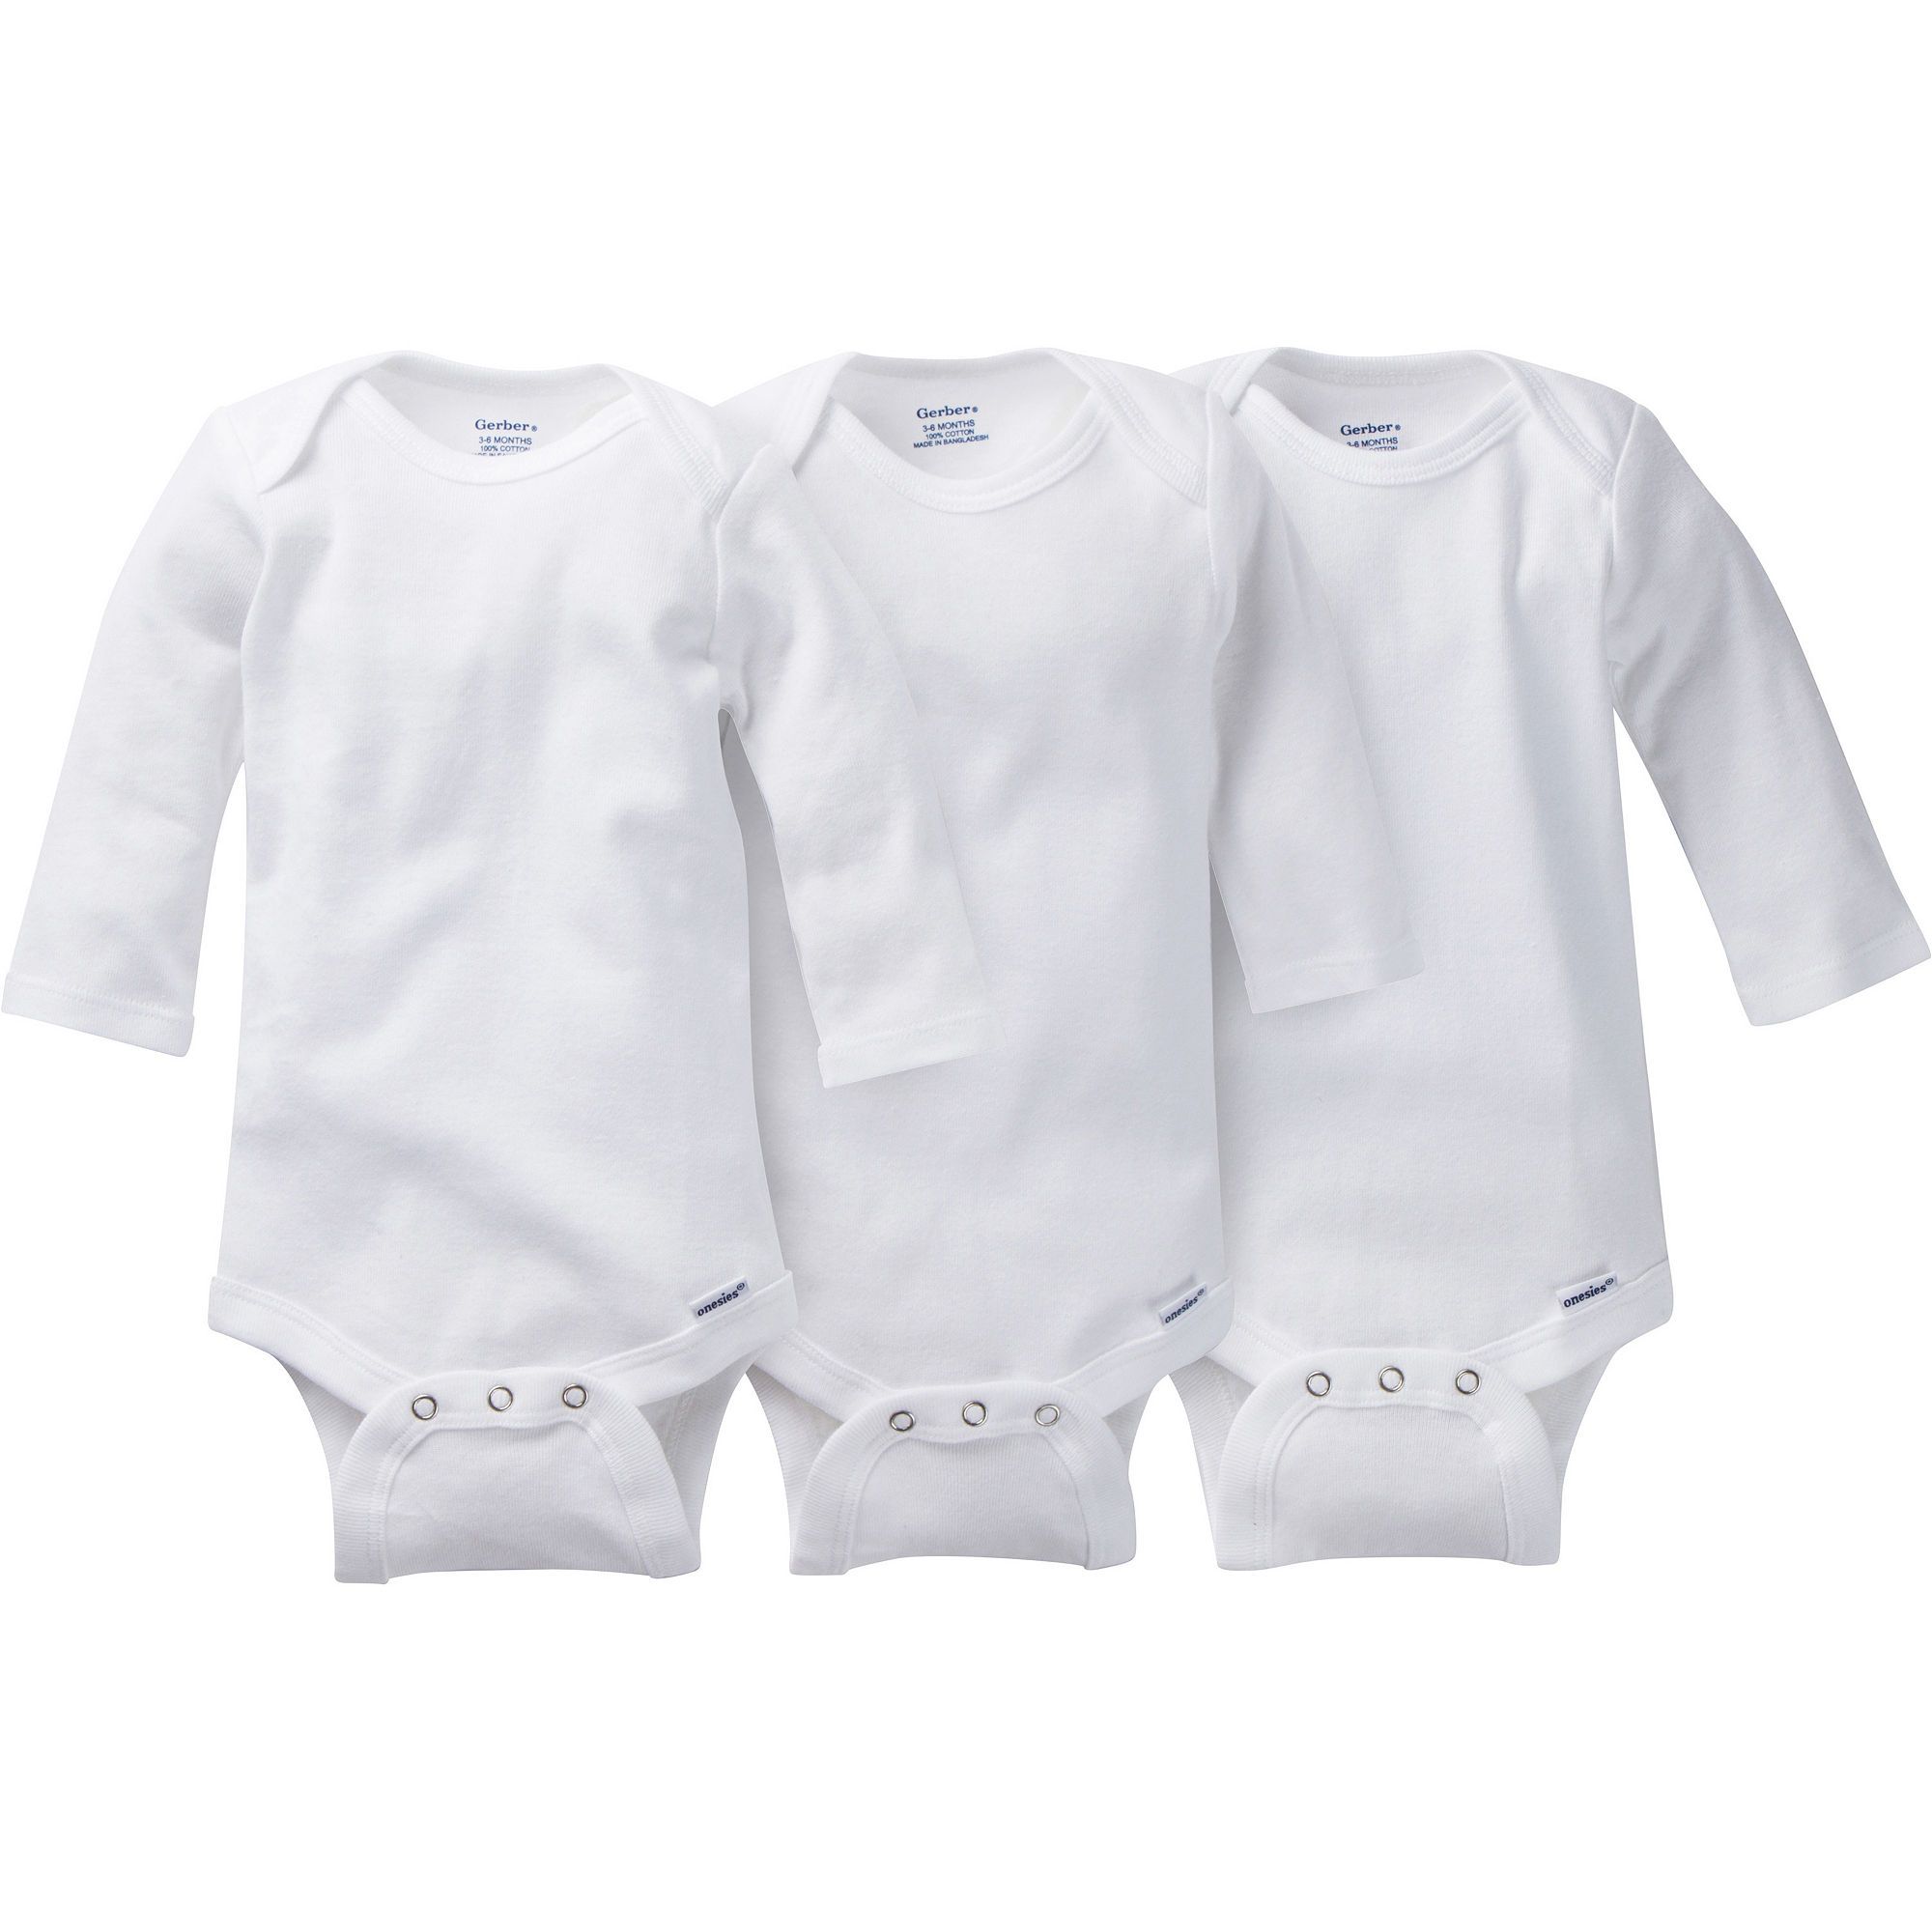 Gerber 3 Pack Long Sleeve White Onesies Bodysuits | JCPenney